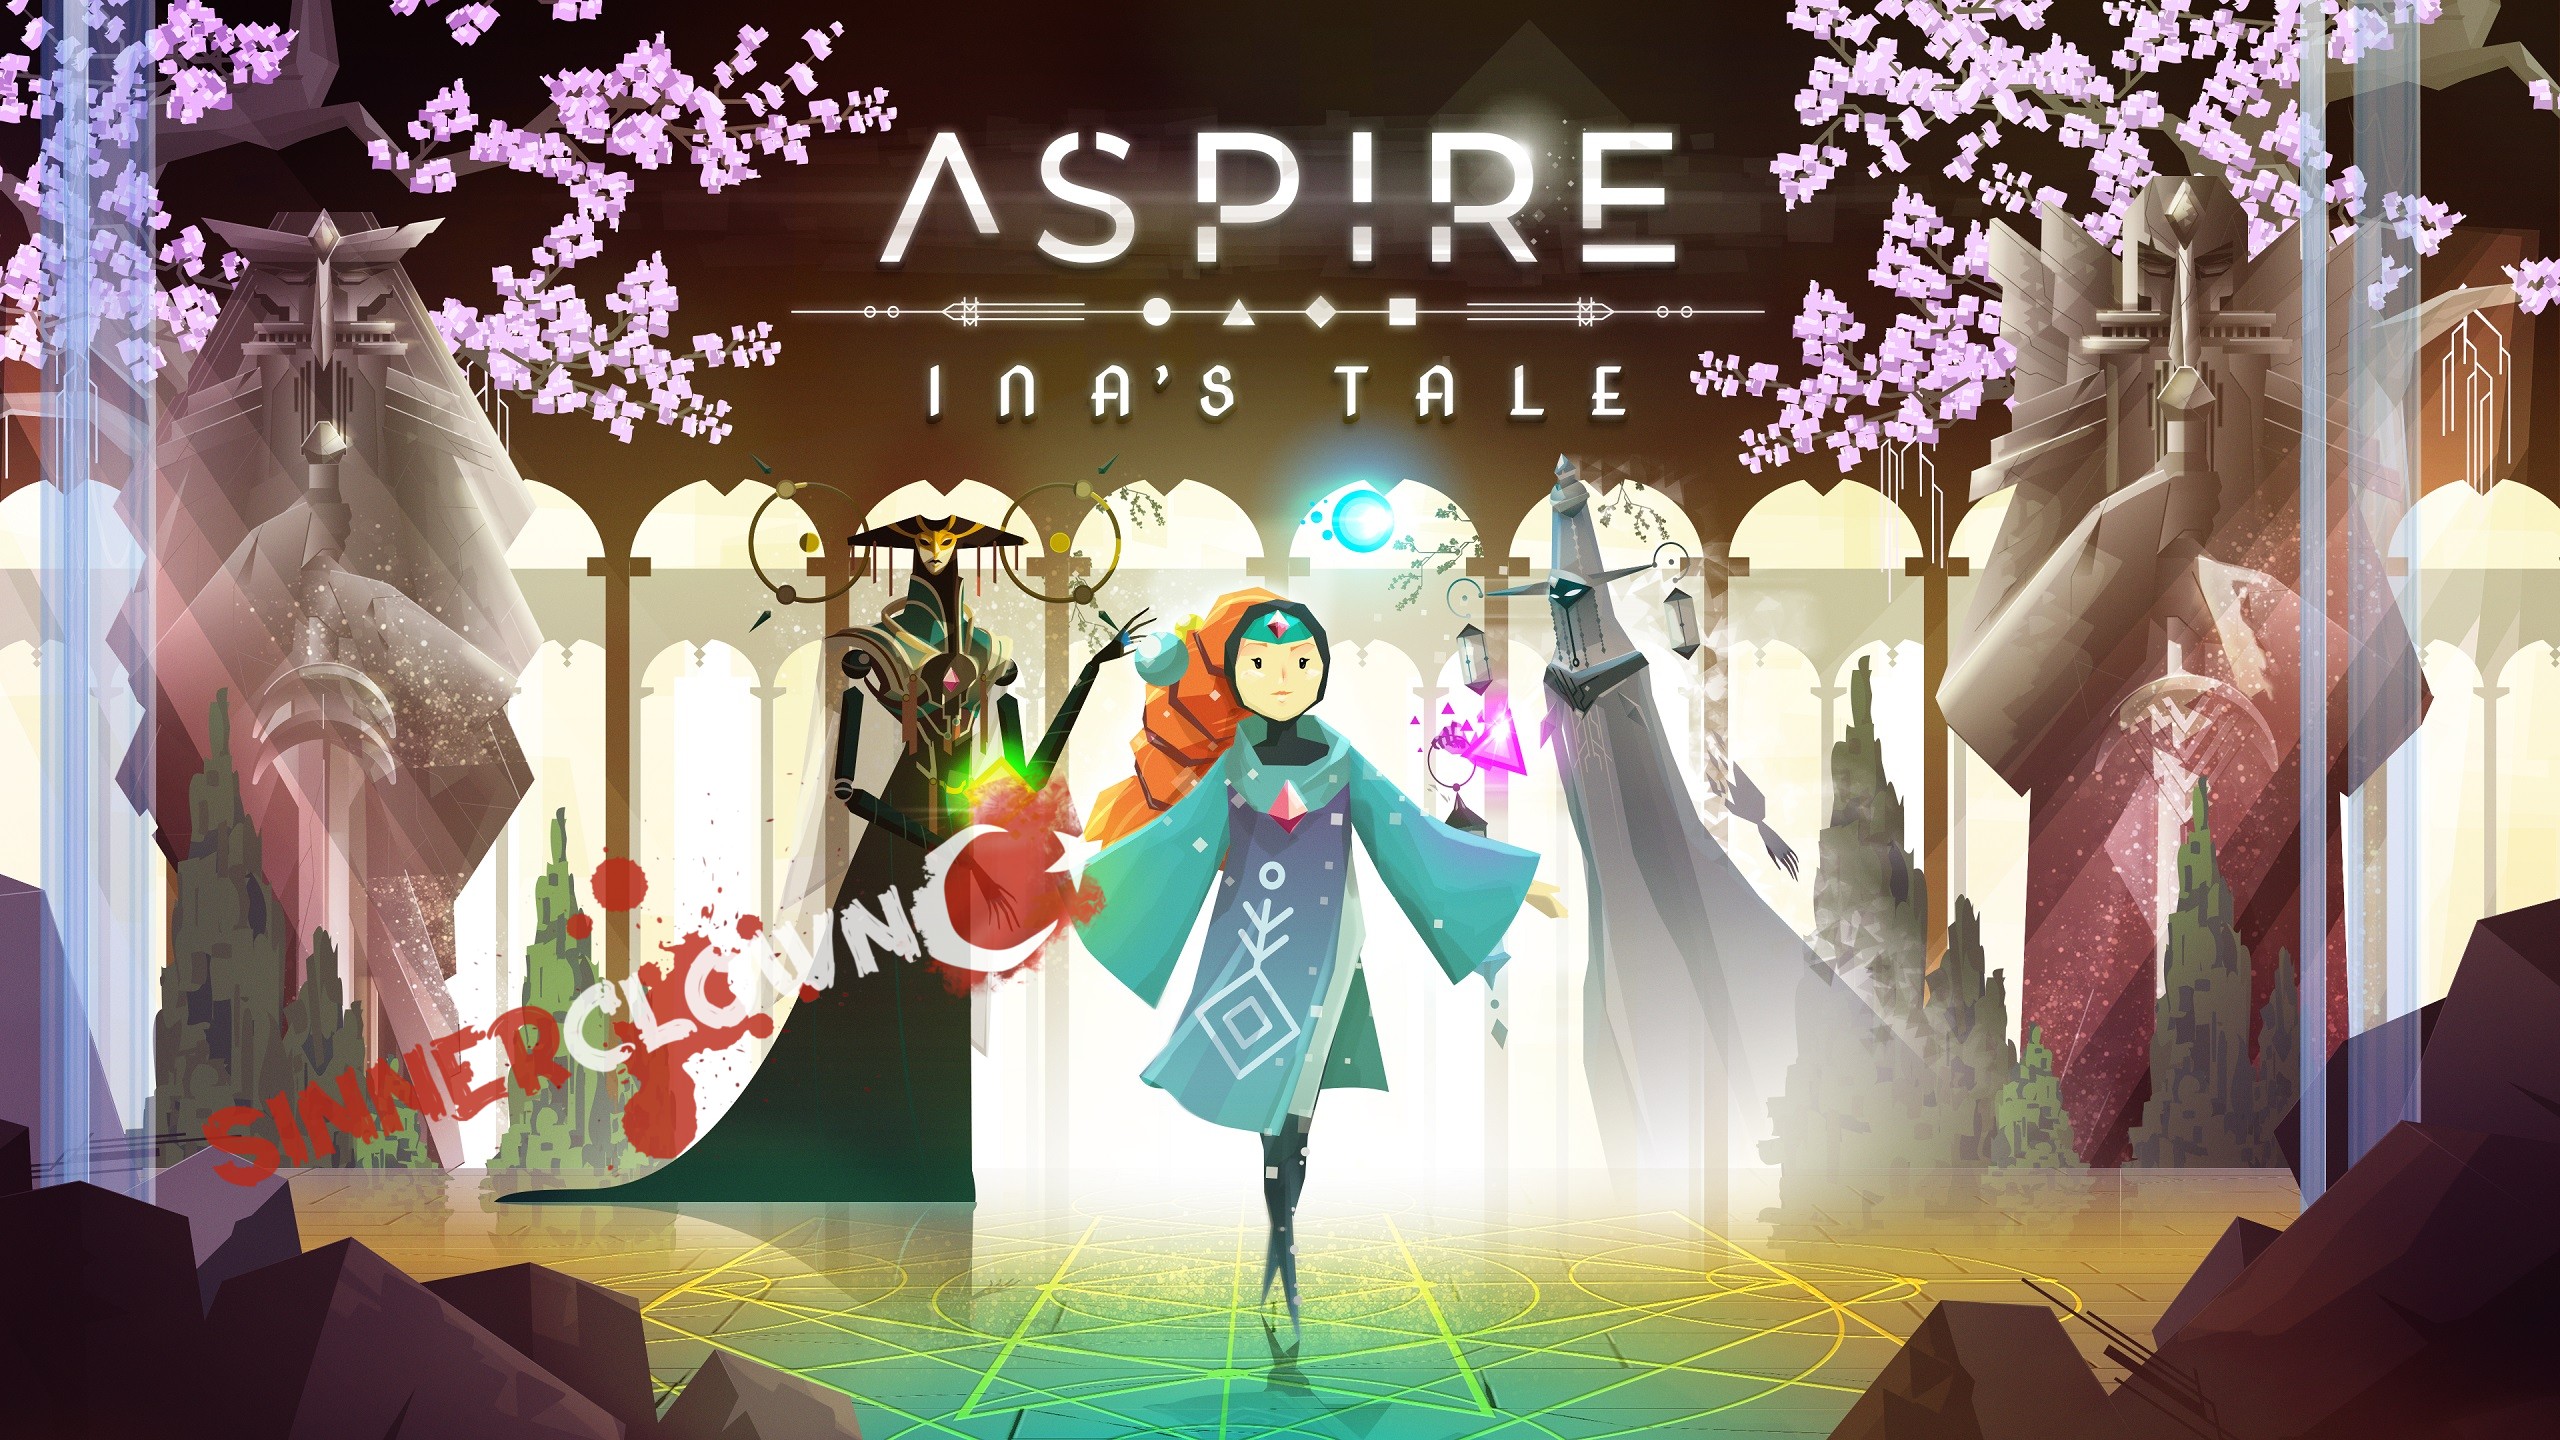 aspire-inas-tale-offer-6lk1p.jpg